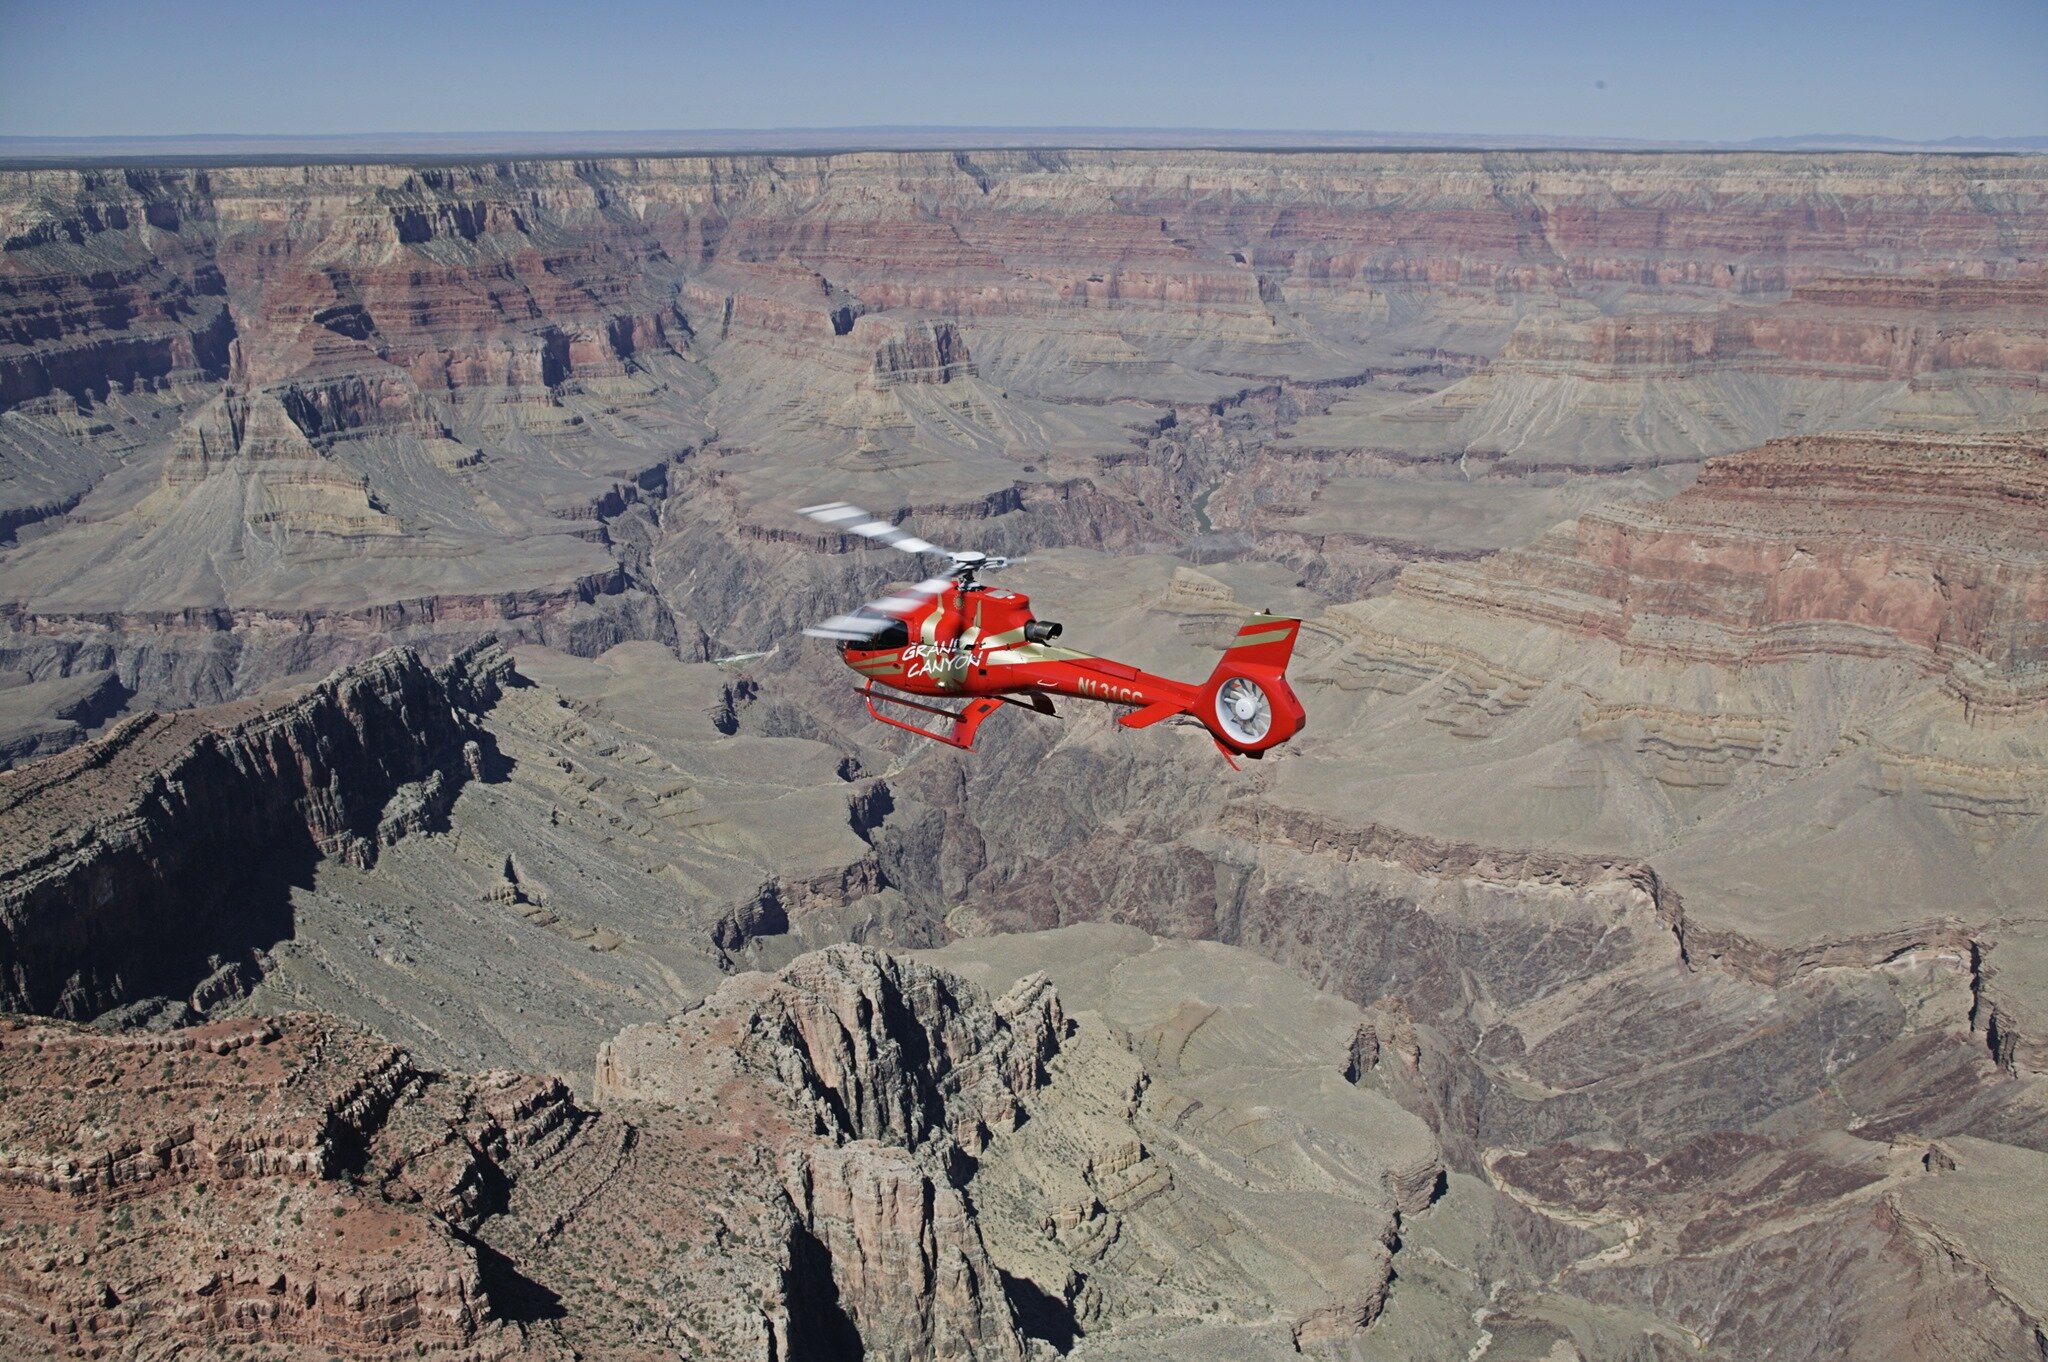 Las Vegas Night Flight – Grand Canyon Tour Company